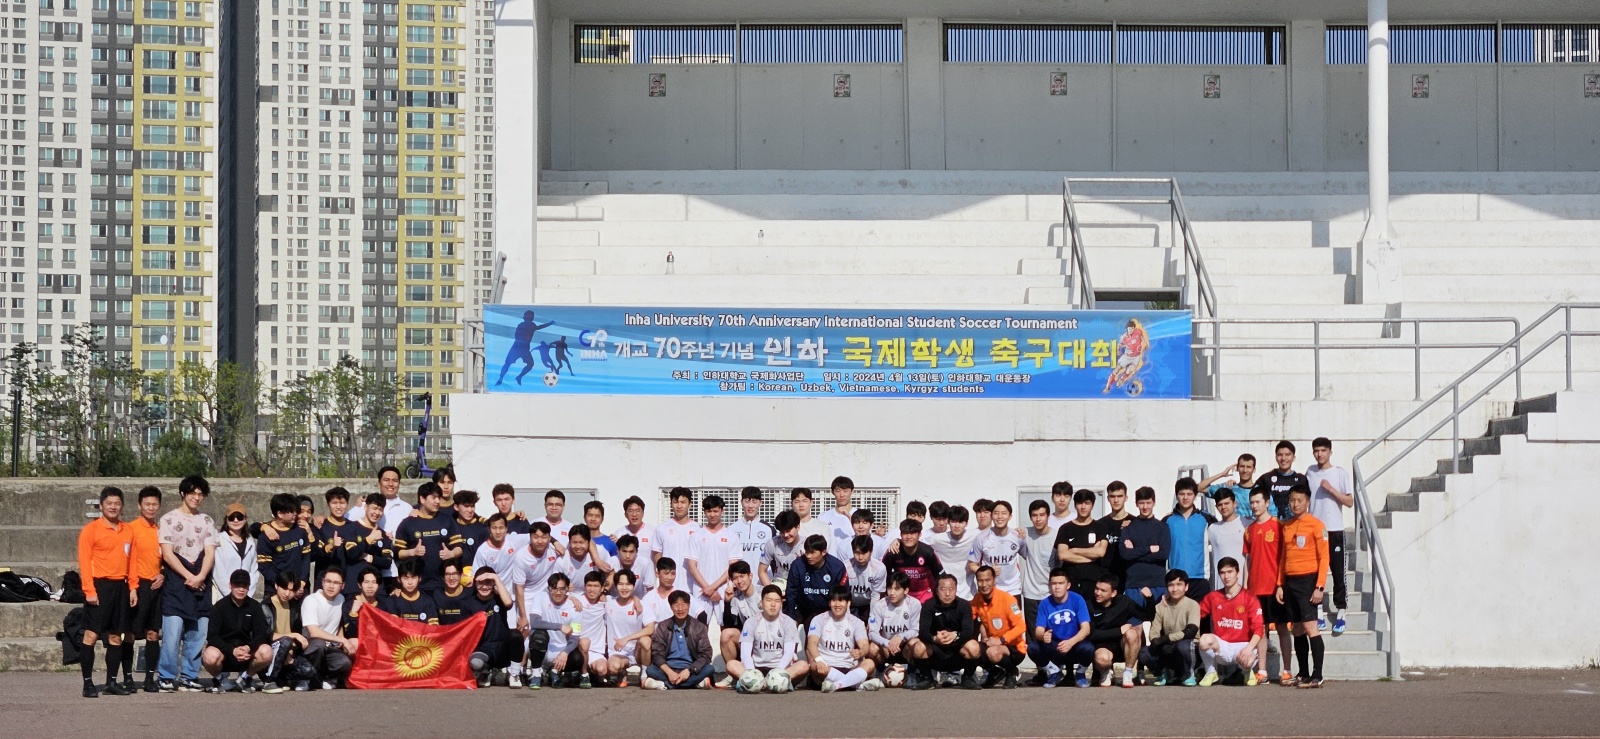 INHA University 70th Anniversary International Student Football Match in great success image